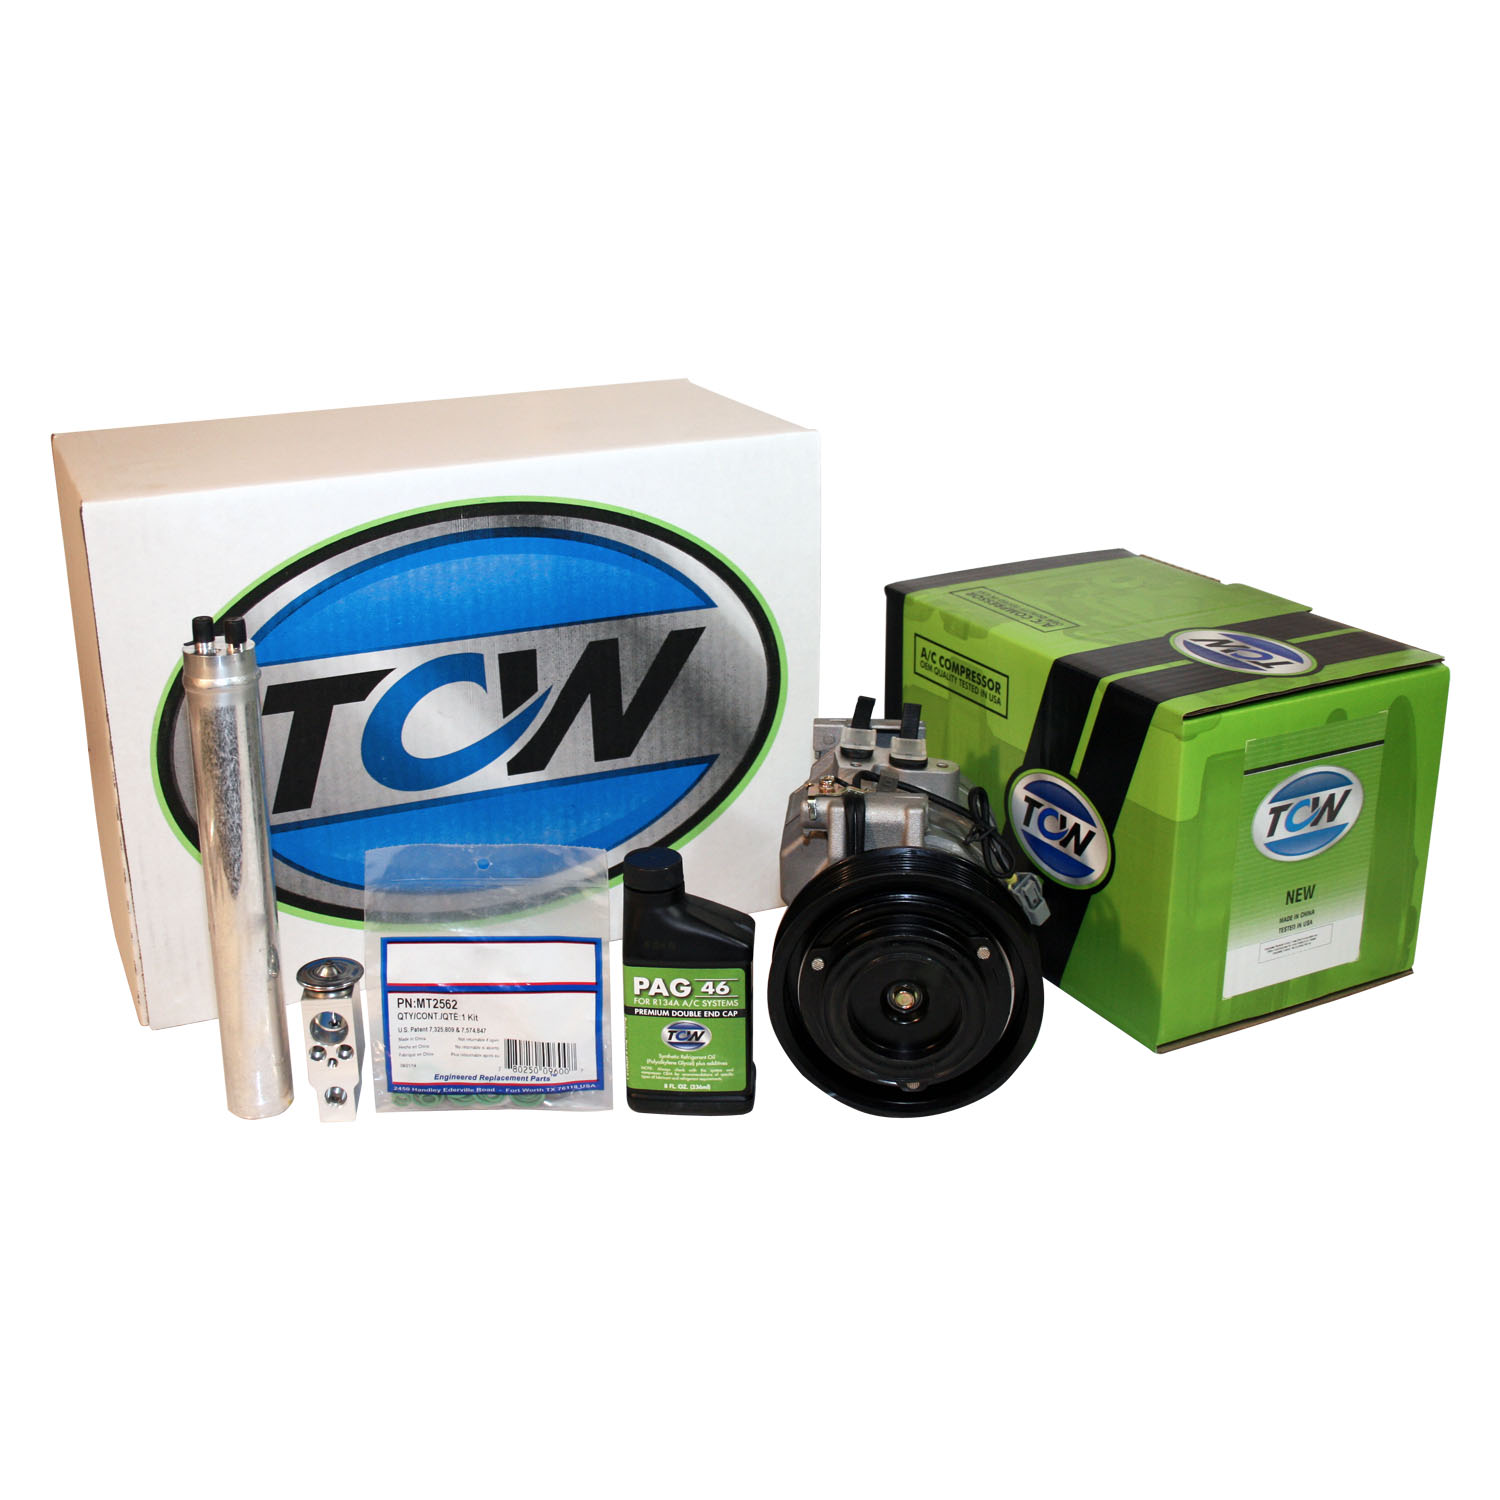 TCW Vehicle A/C Kit K1000274N New Product Image field_60b6a13a6e67c